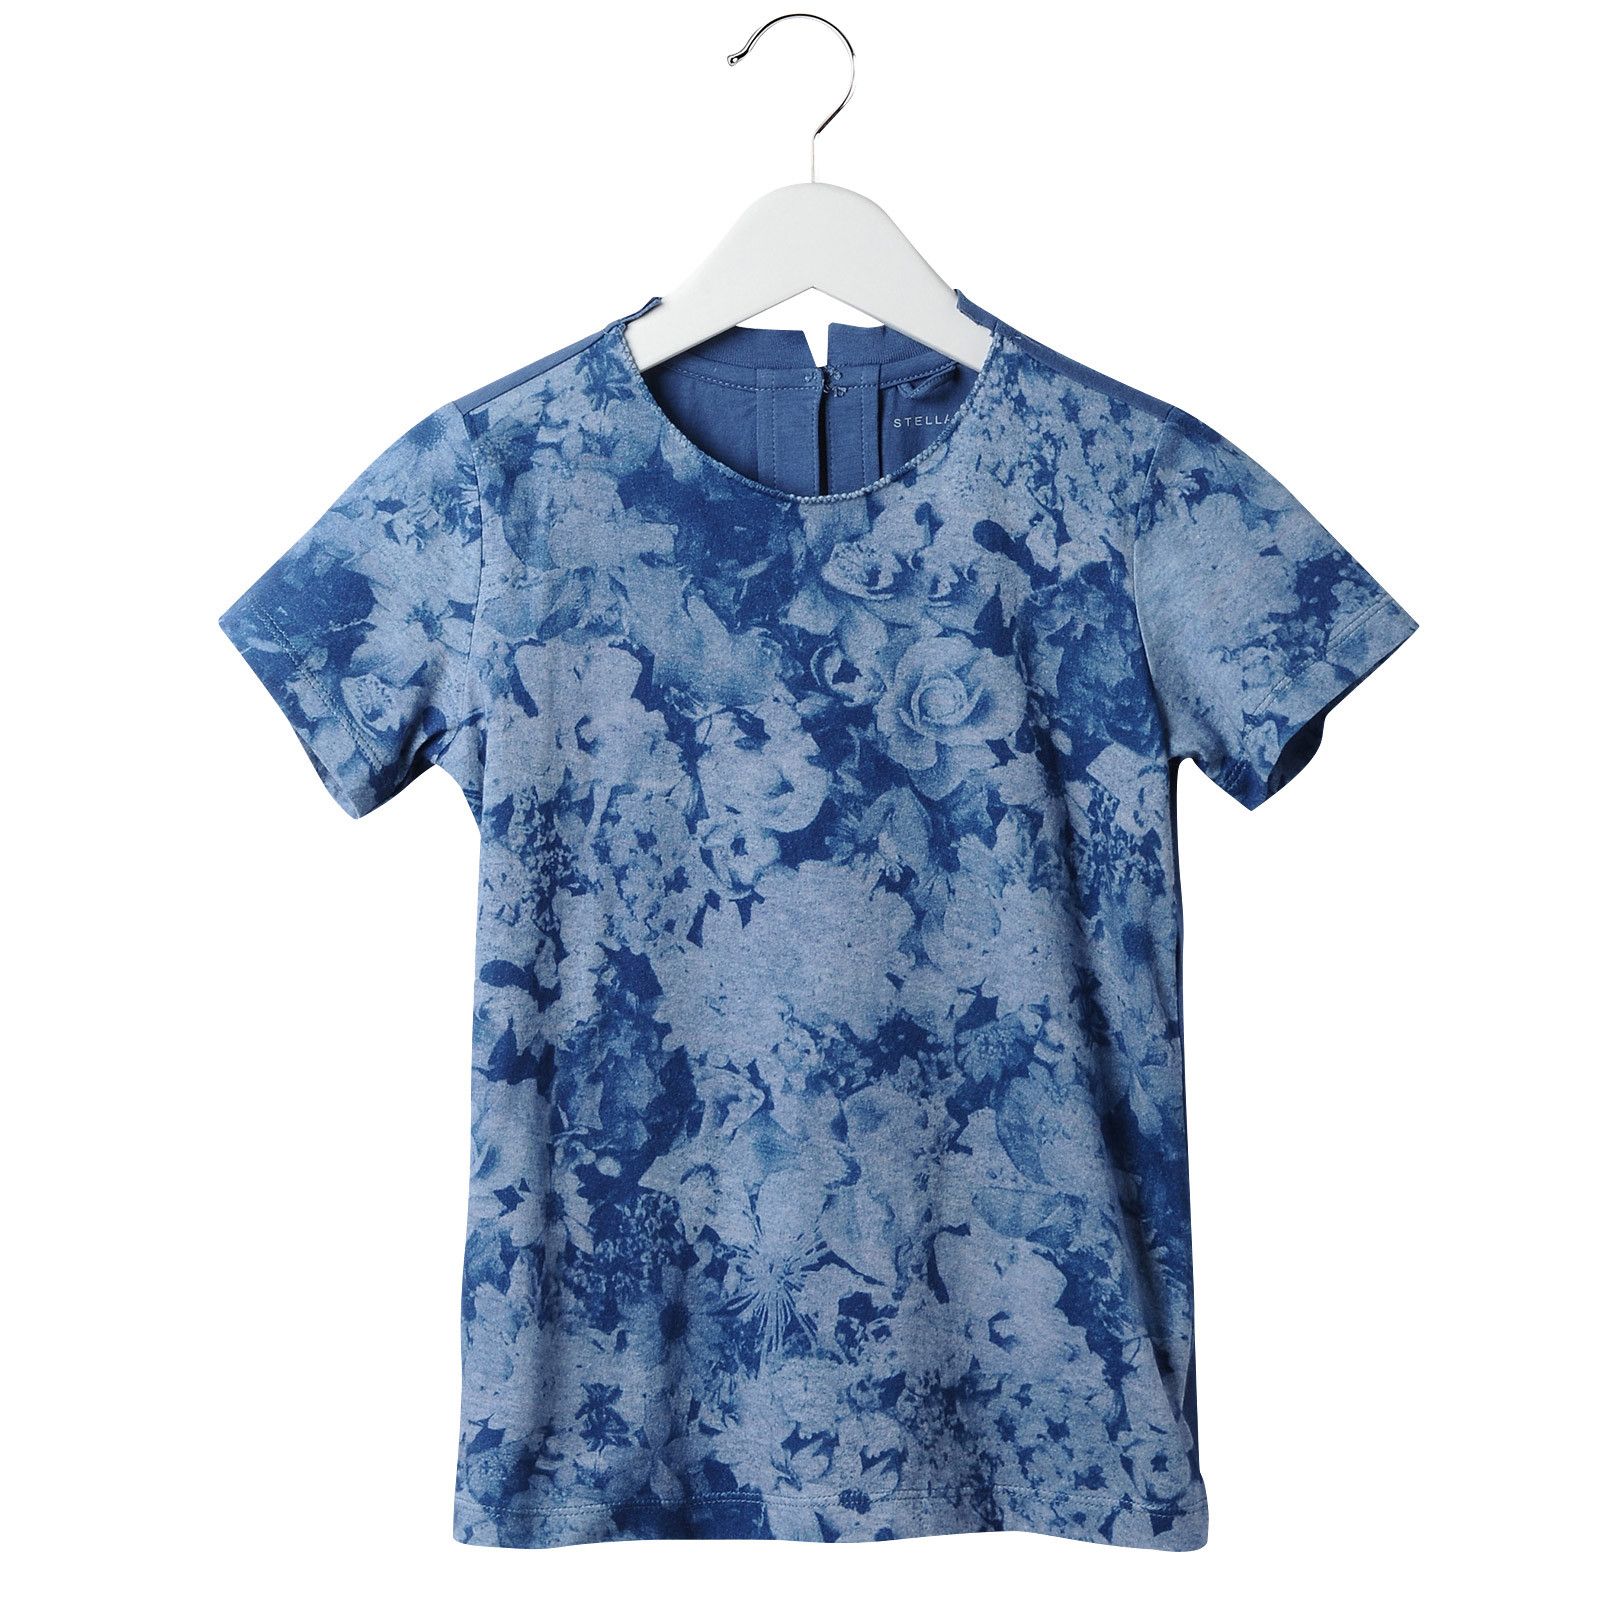 Girls Blue Flower Printed Cotton T-Shirt - CÉMAROSE | Children's Fashion Store - 1